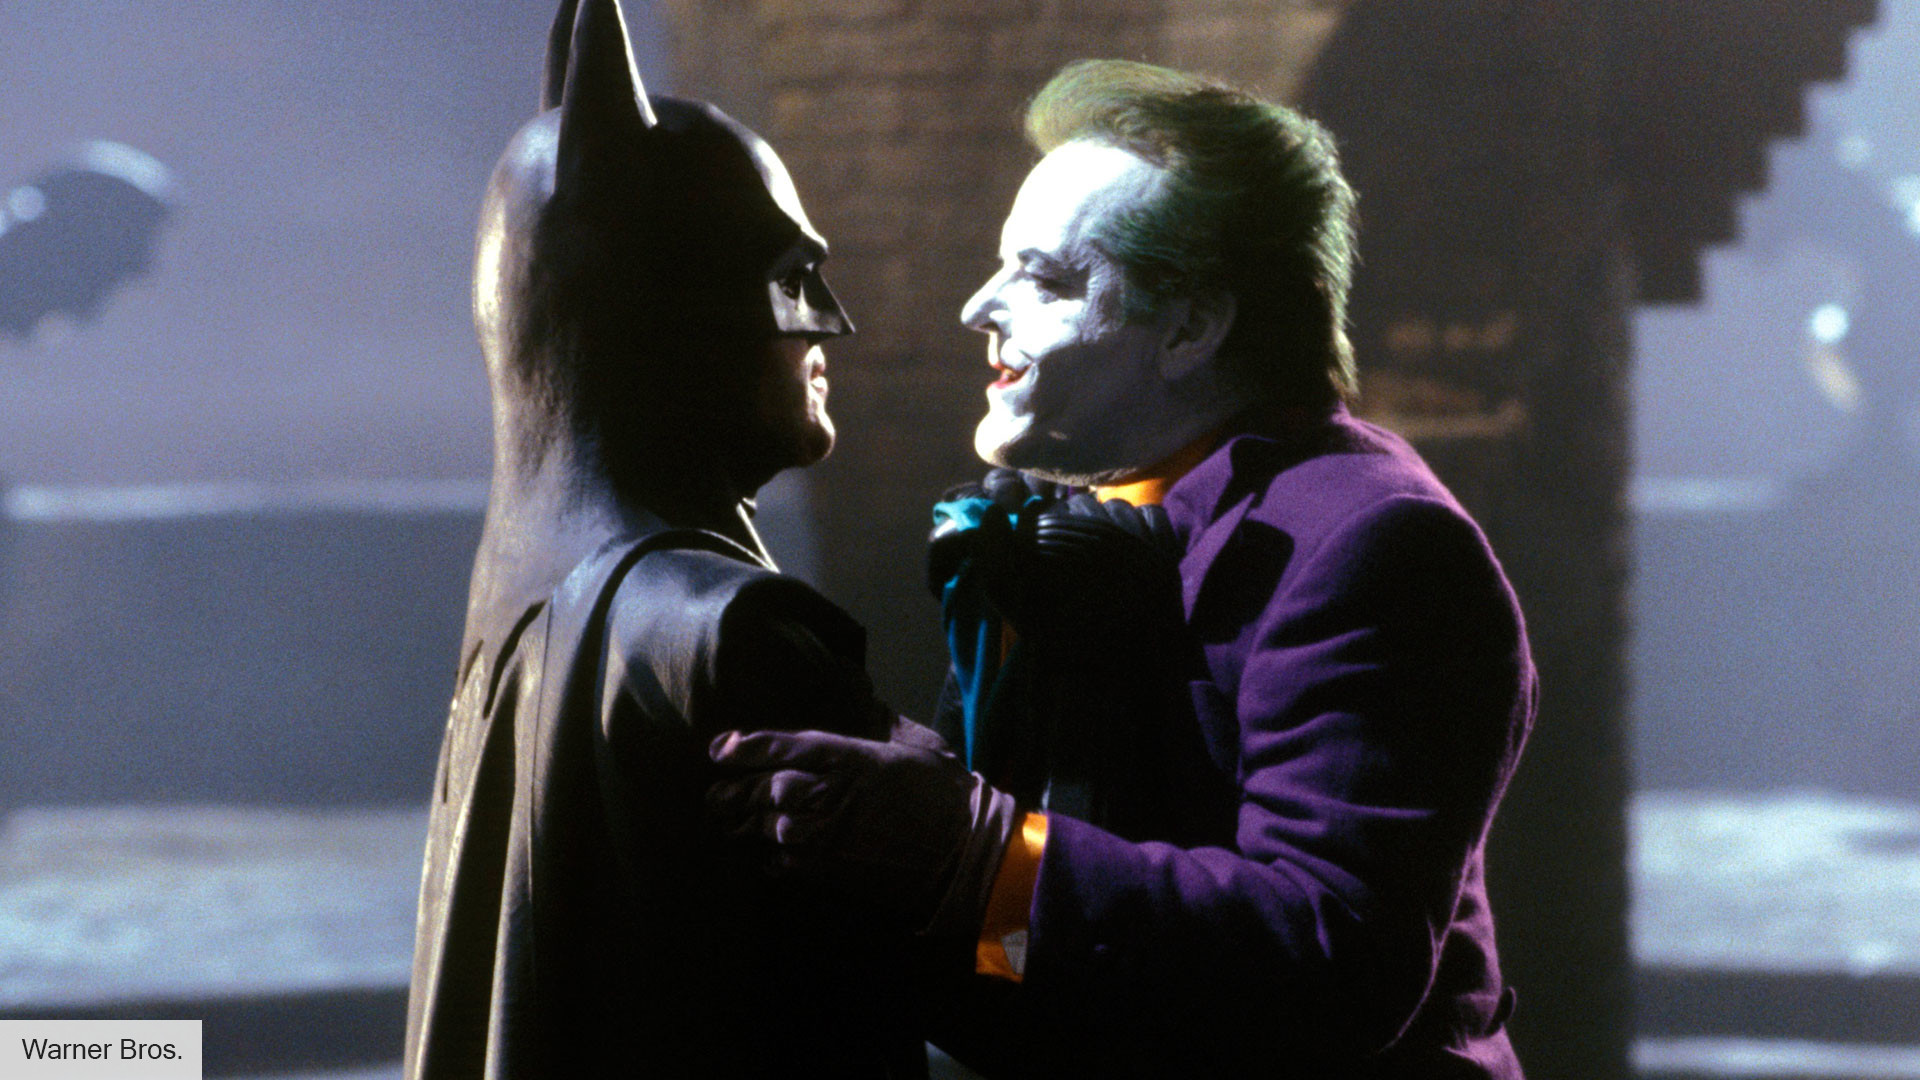 Michael Keaton is the best Batman, and one scene proves it | The Digital Fix